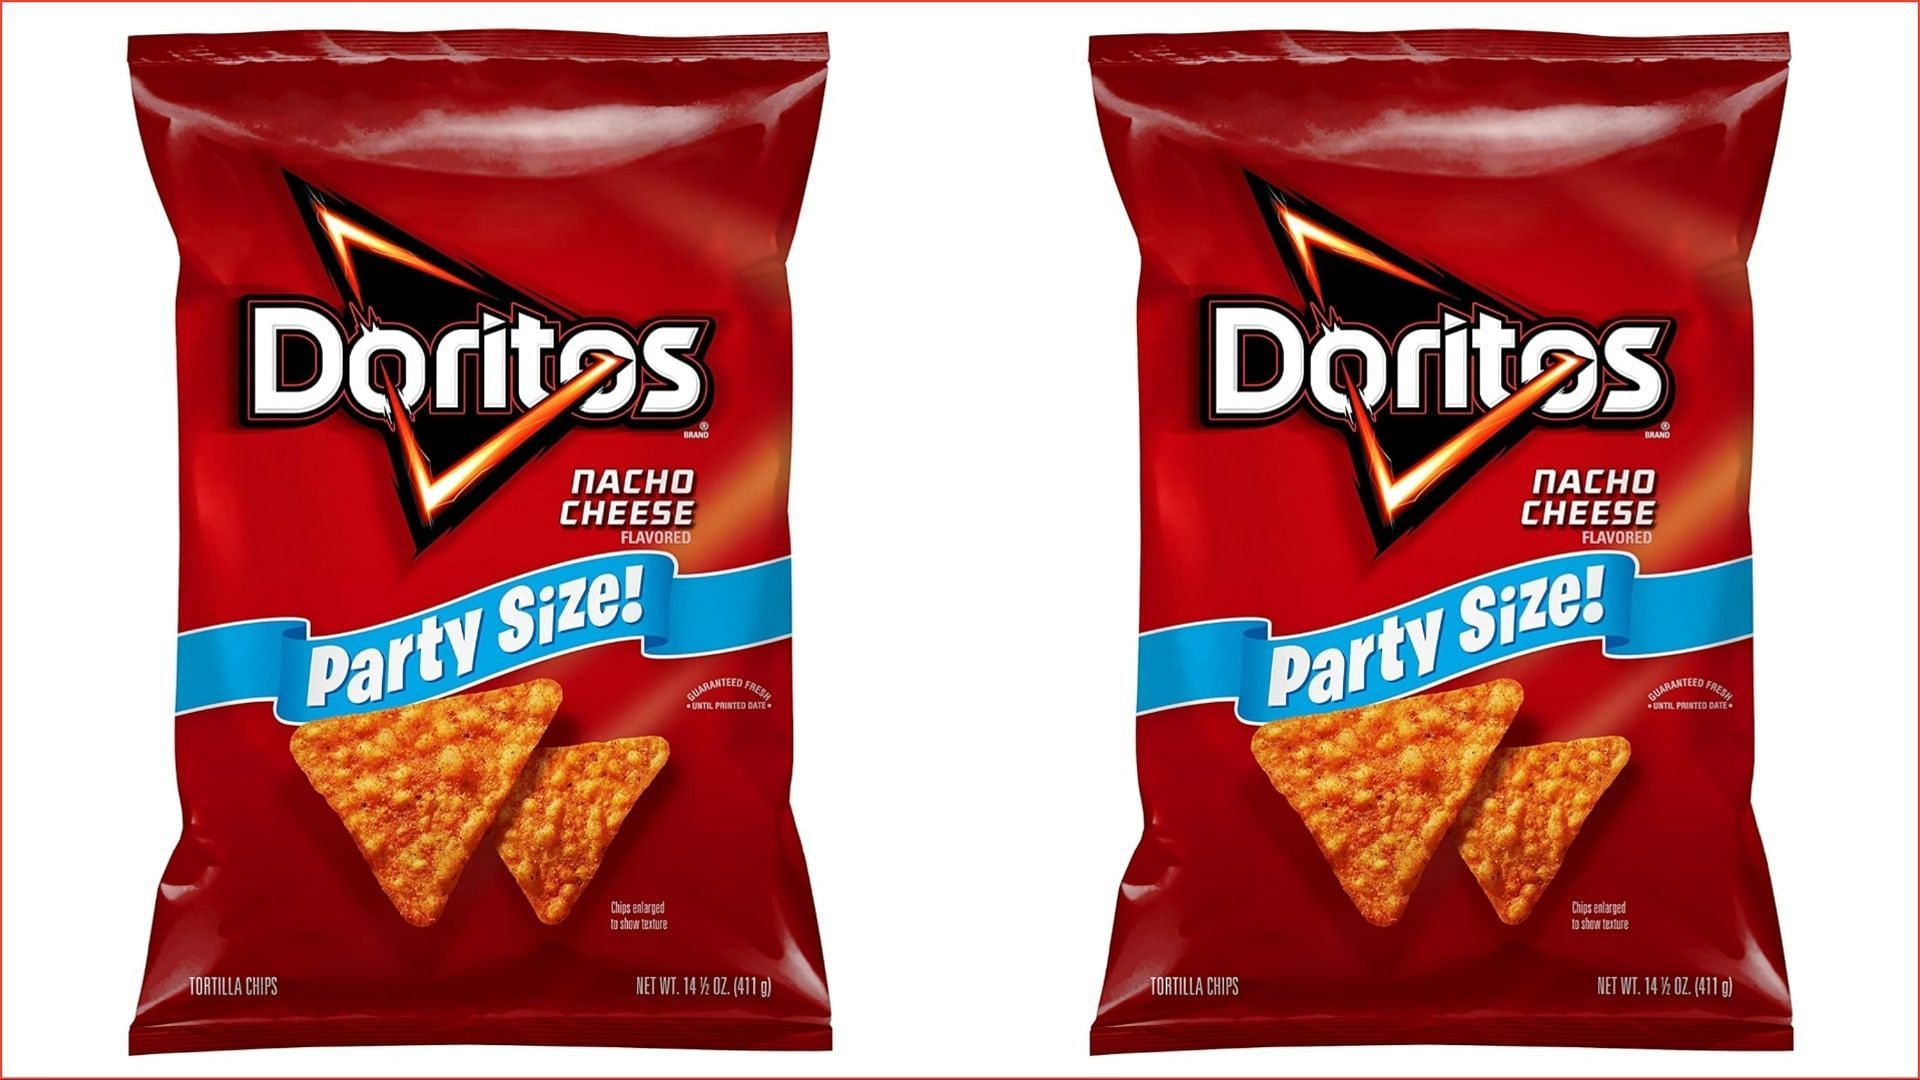 Doritos sold in PA recall for allergy concerns